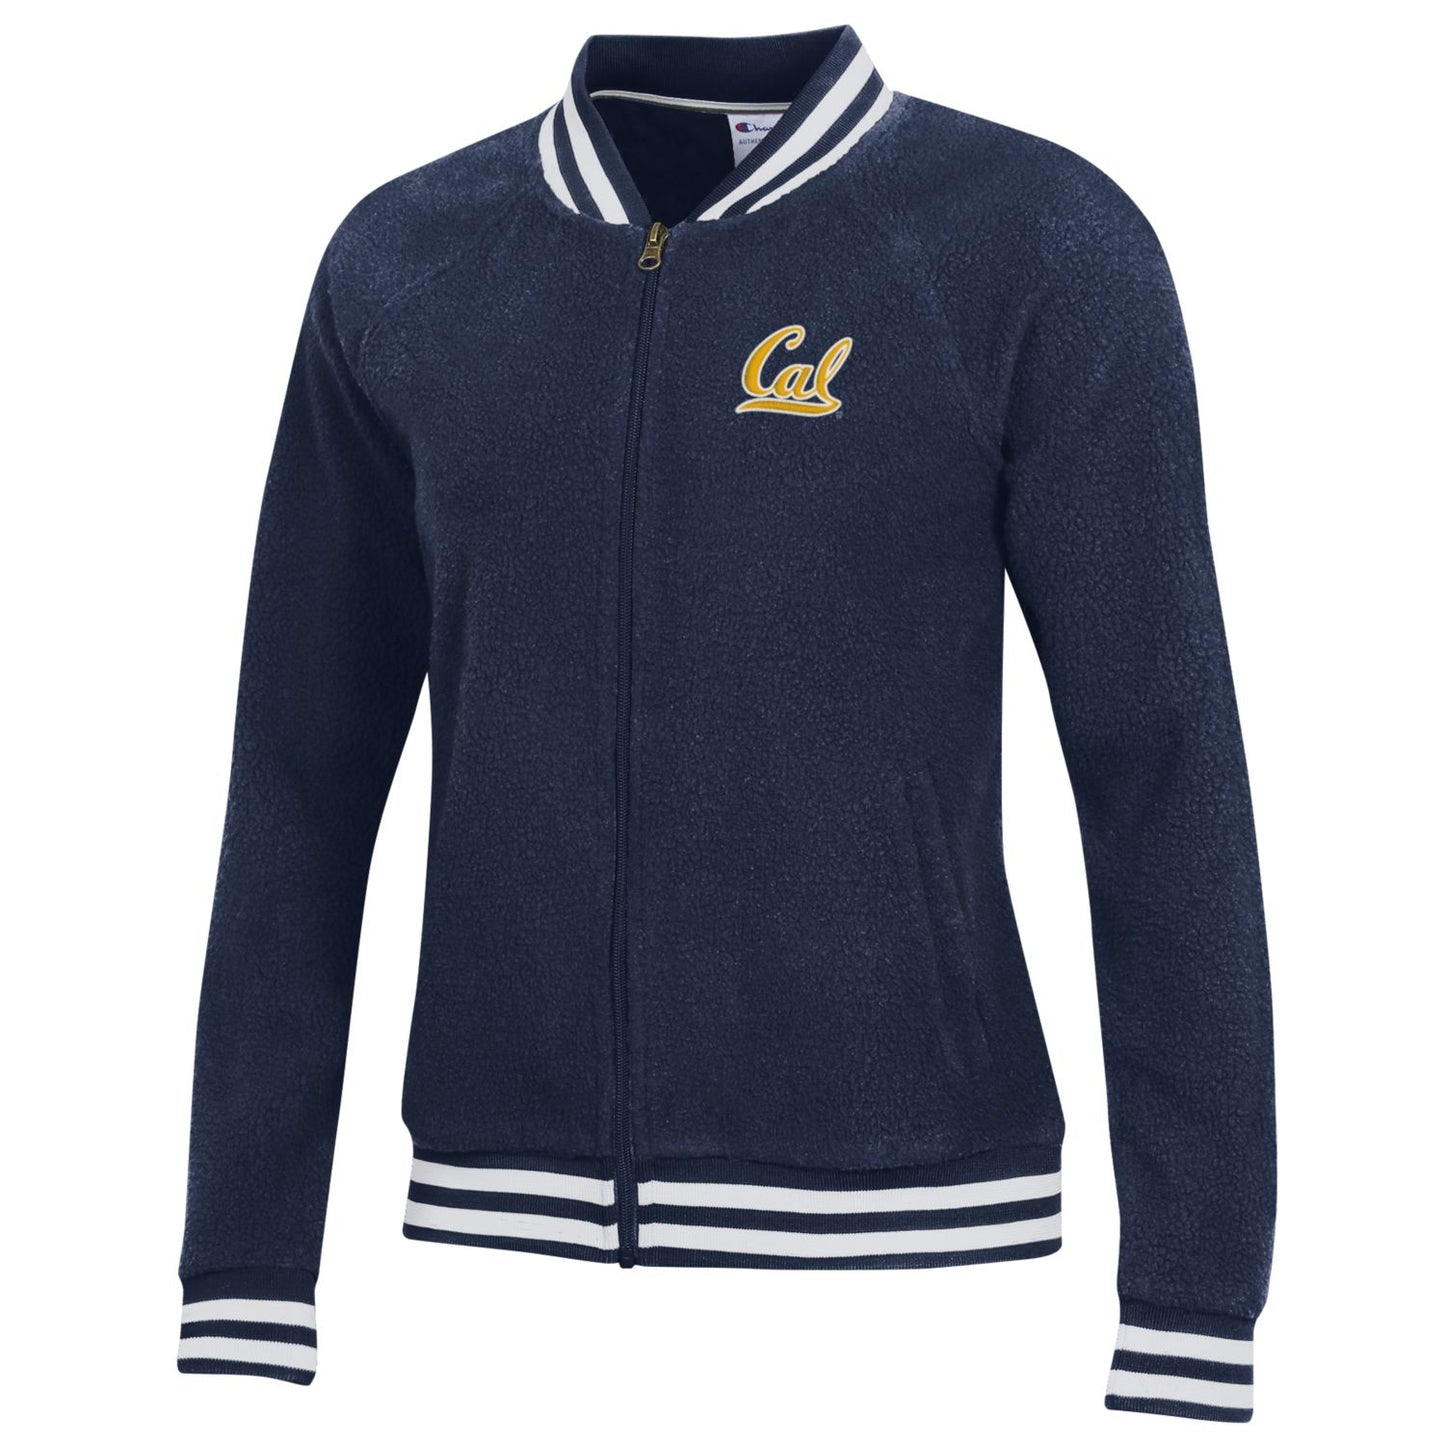 U.C. Berkeley Cal embroidered Champion women's sherpa Zip baseball Jacket-Navy-Shop College Wear